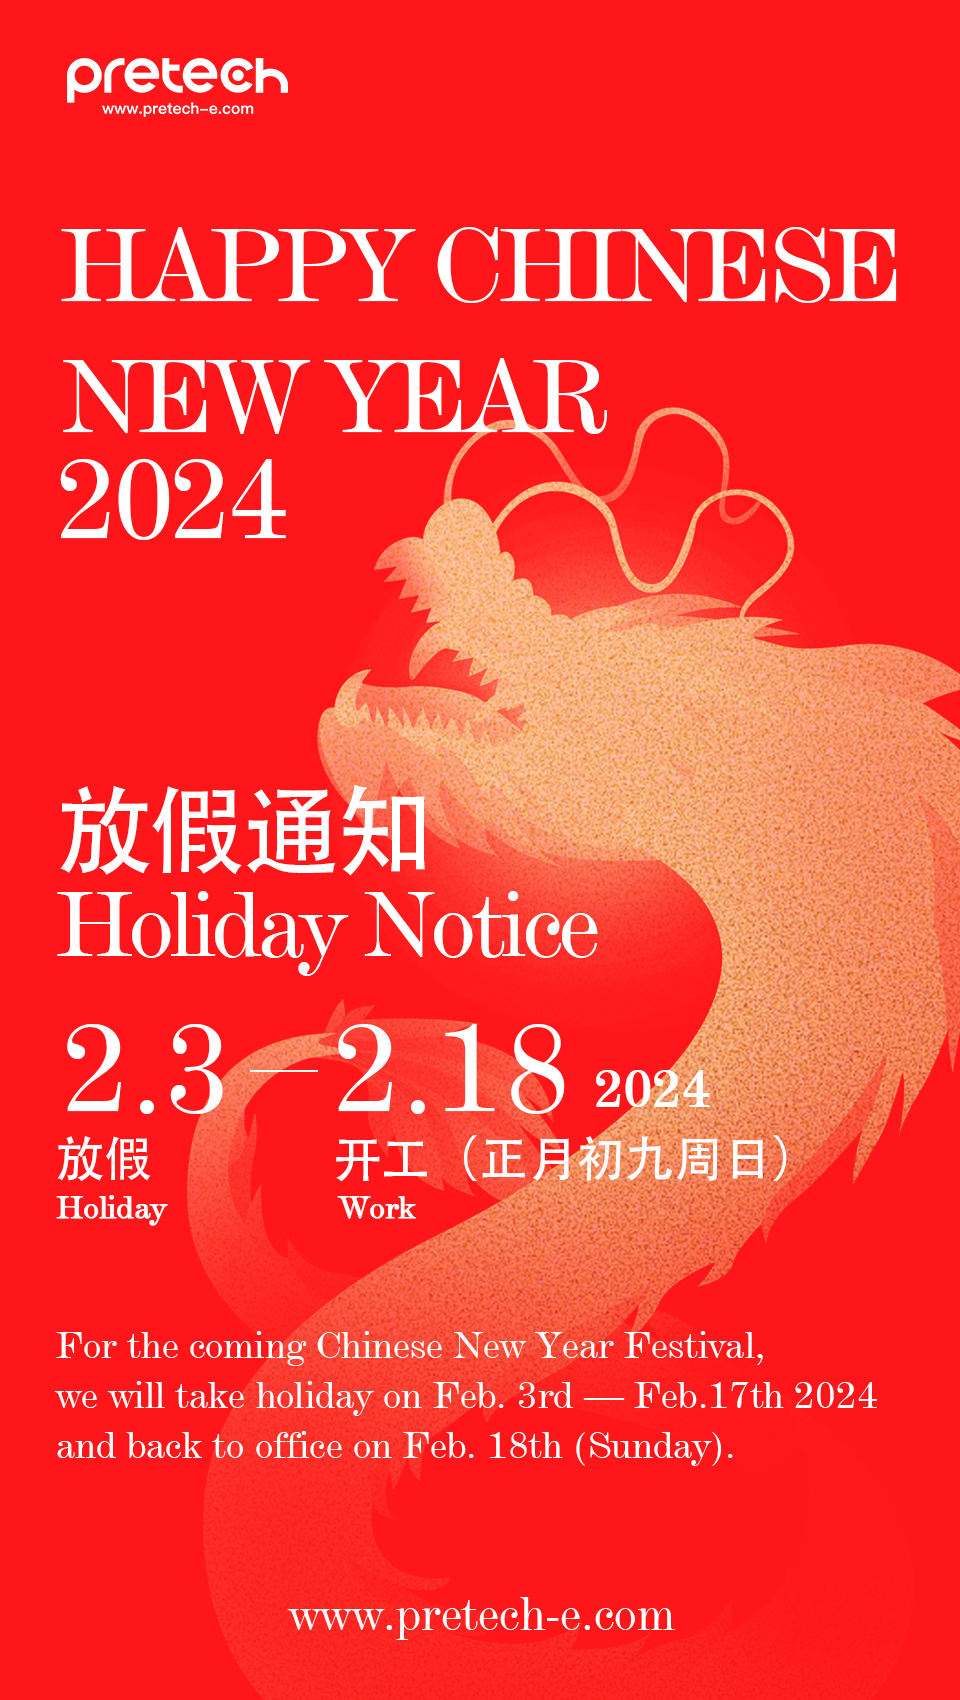 pretech Spring Festival Holiday Notice.jpg